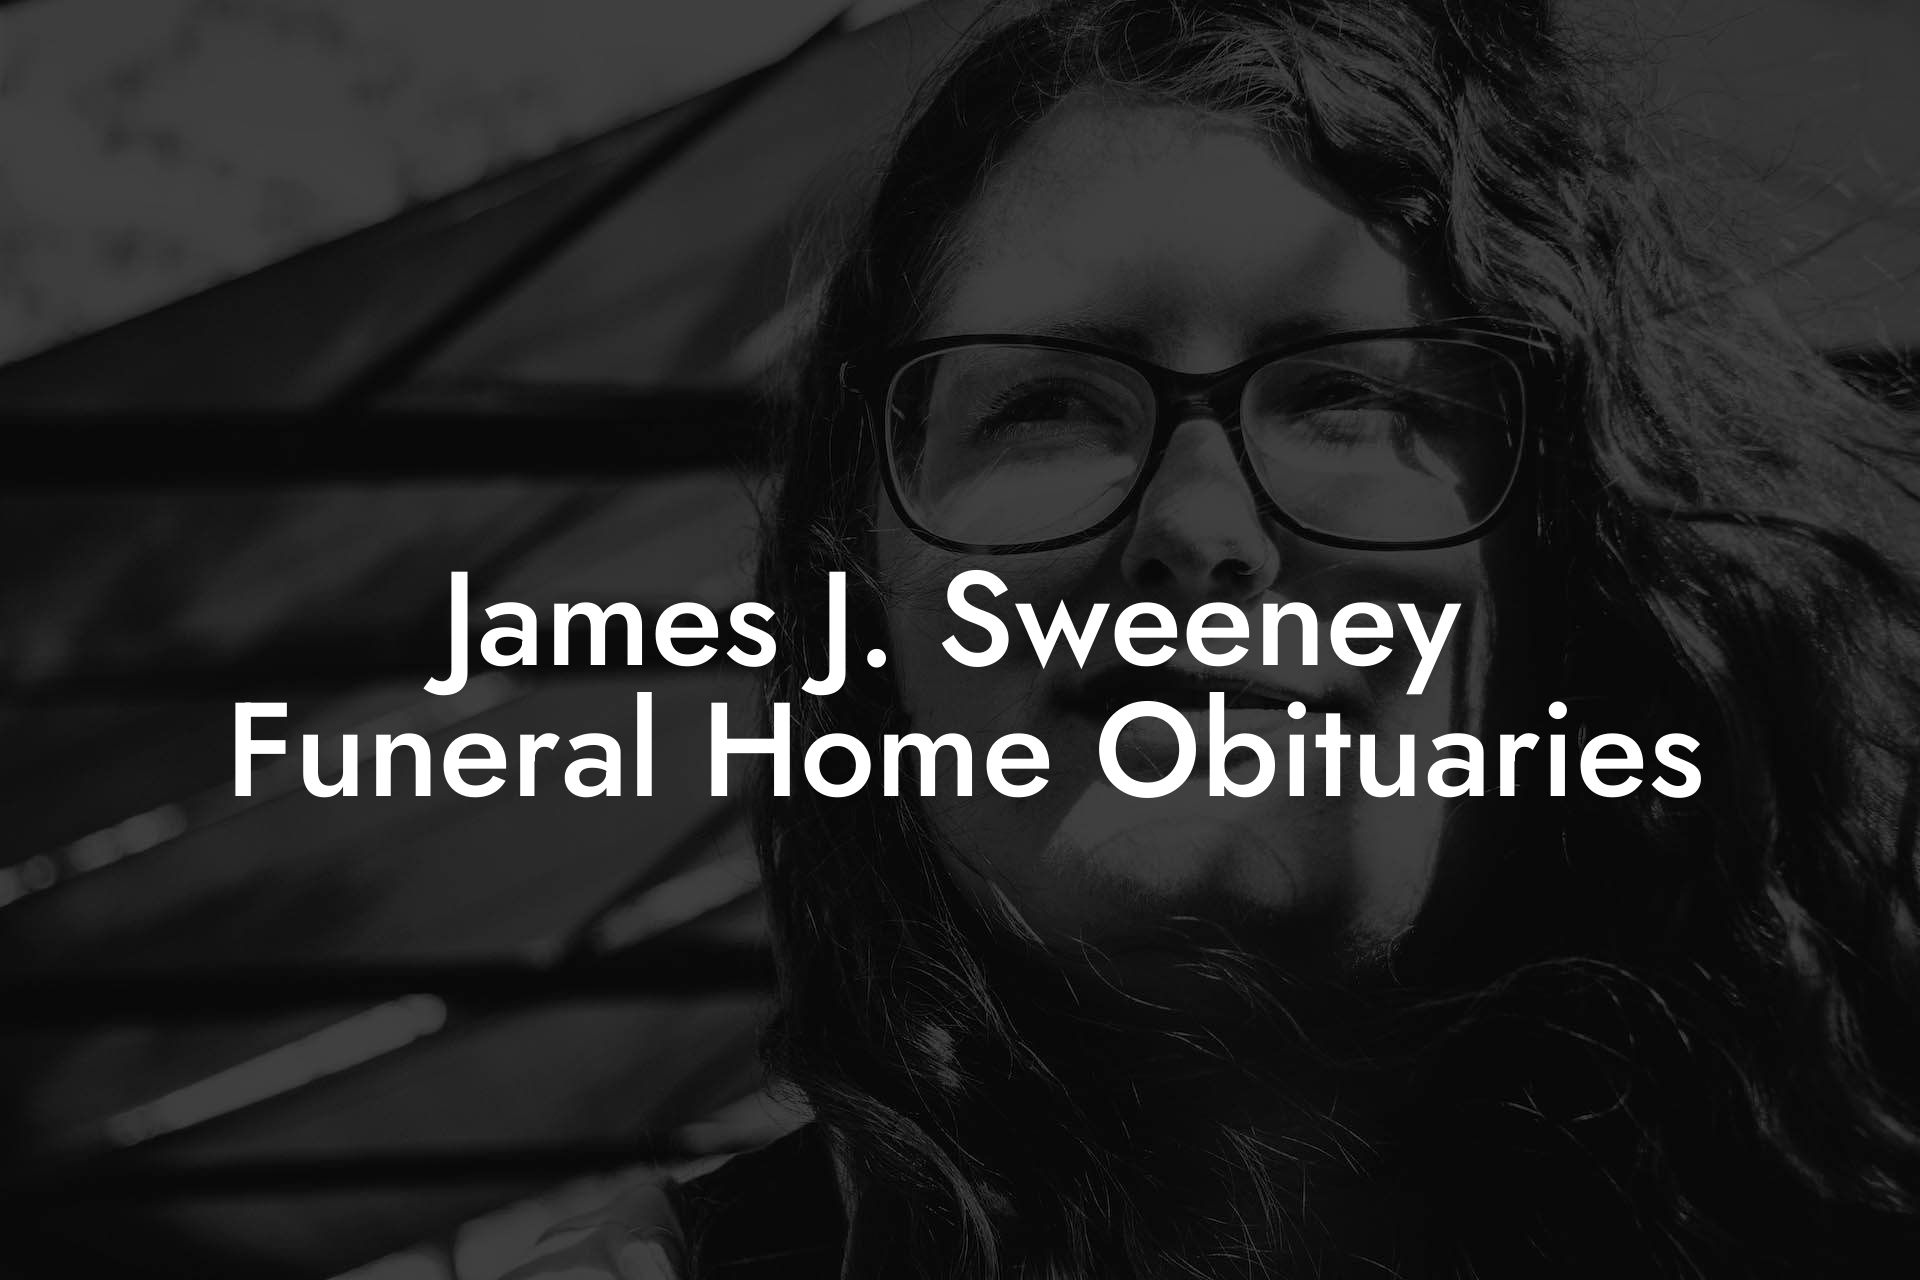 James J. Sweeney Funeral Home Obituaries